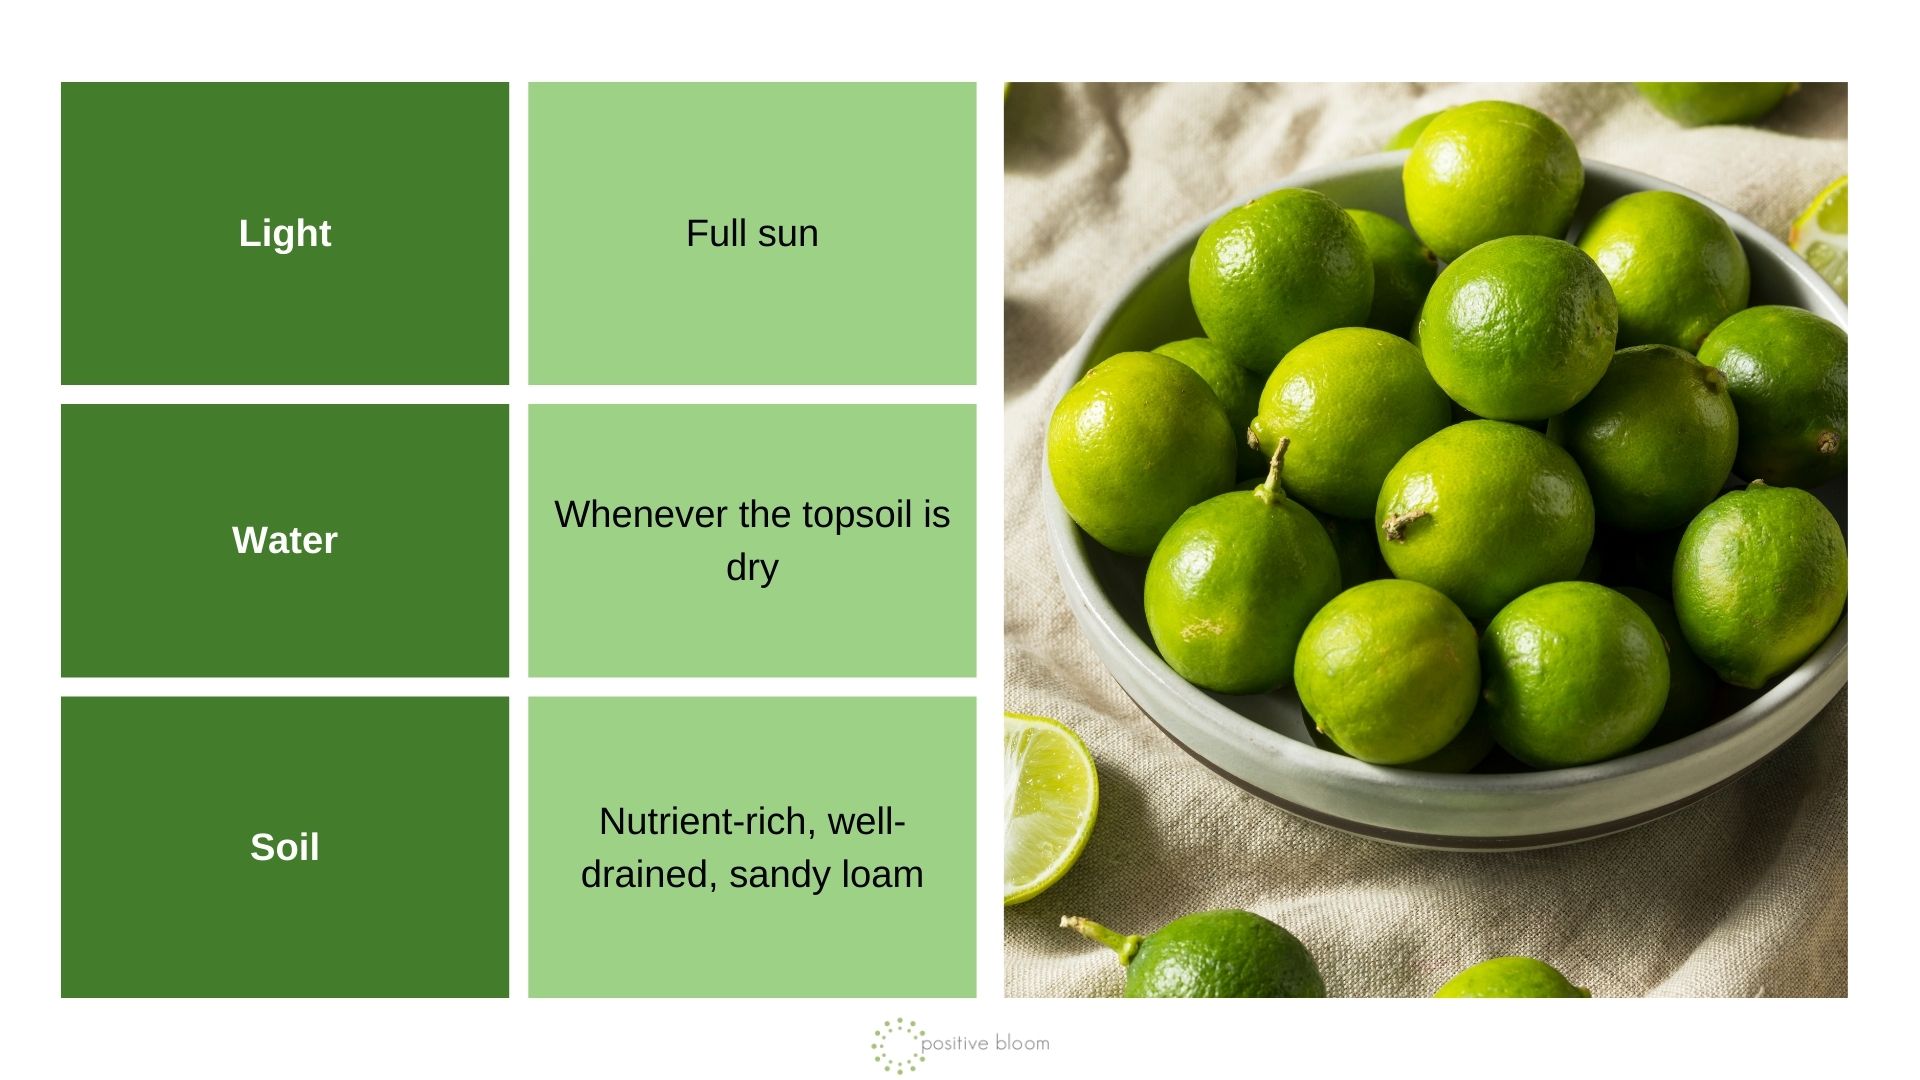 Key Lime info chart and photo